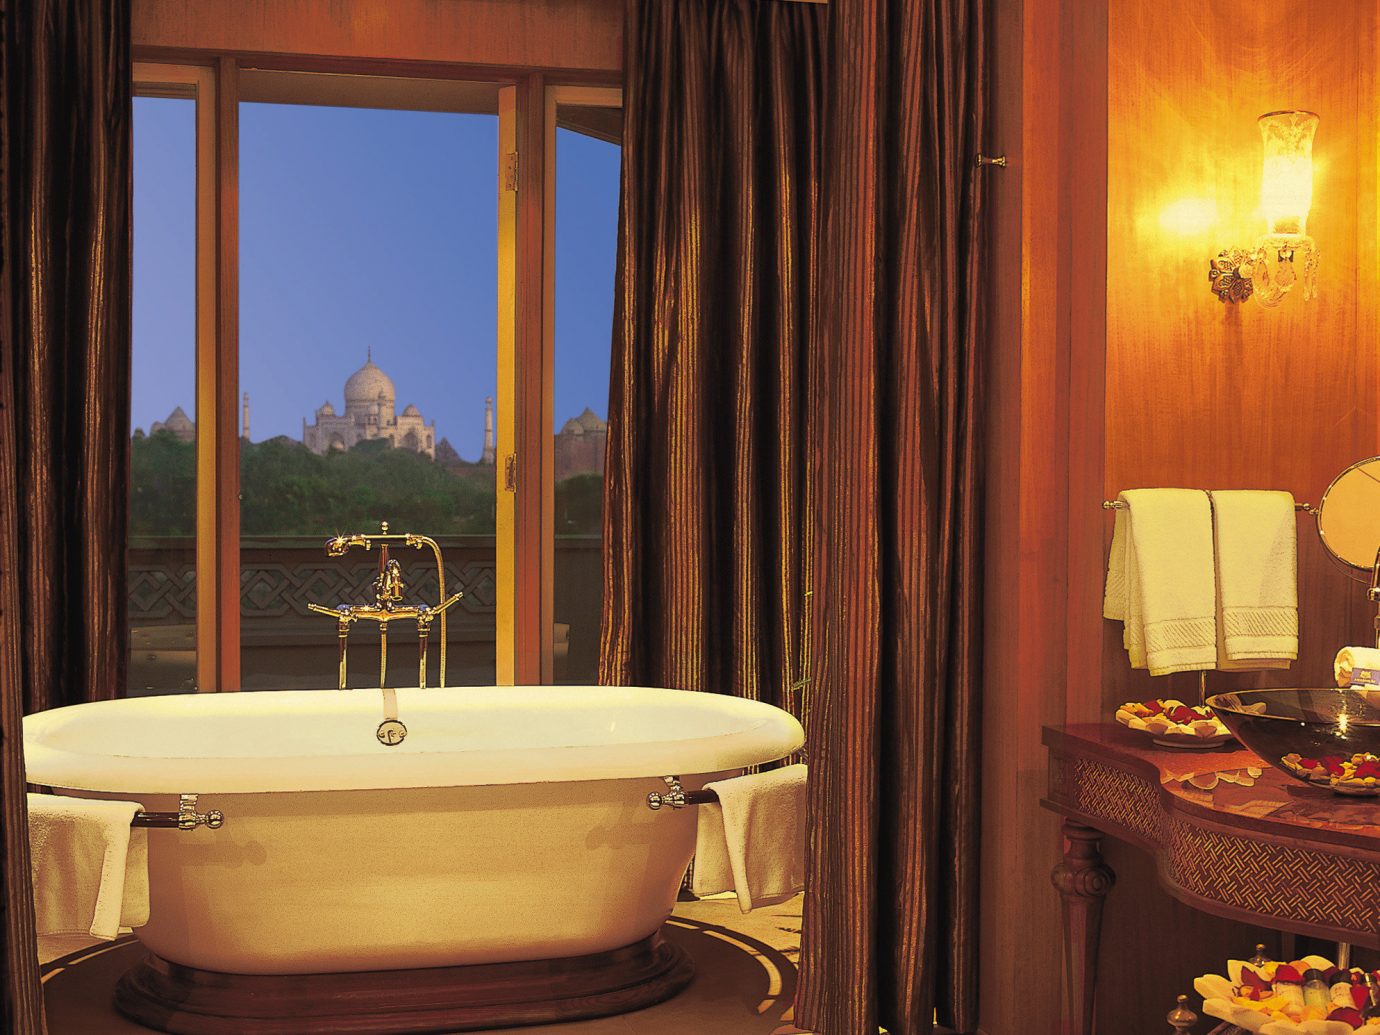 Hotels Luxury Travel indoor room window bathroom Suite interior design estate swimming pool bathtub old tub